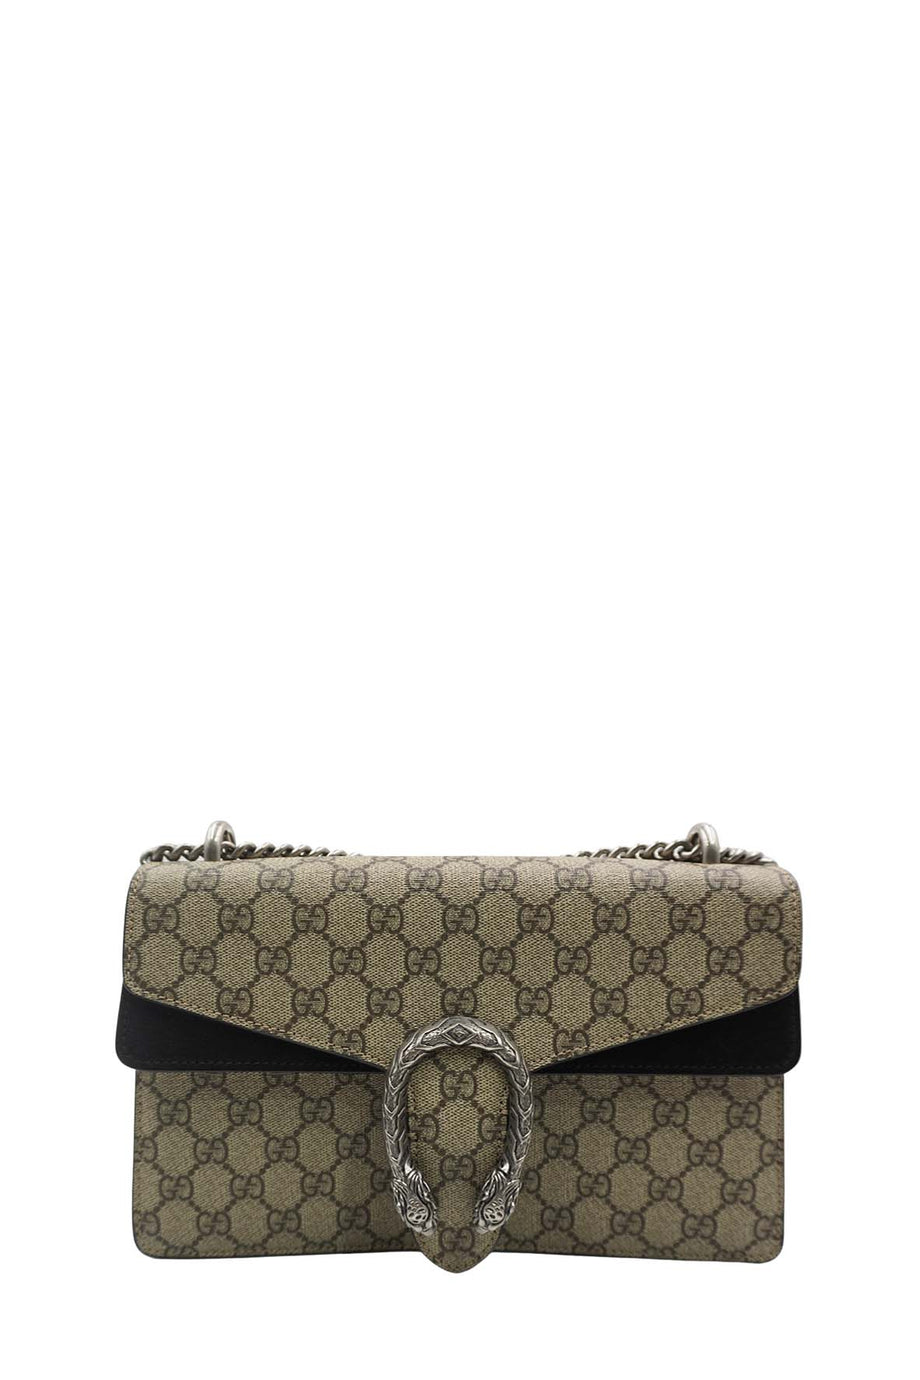 Gucci Medium GG Supreme Suitcase - Black